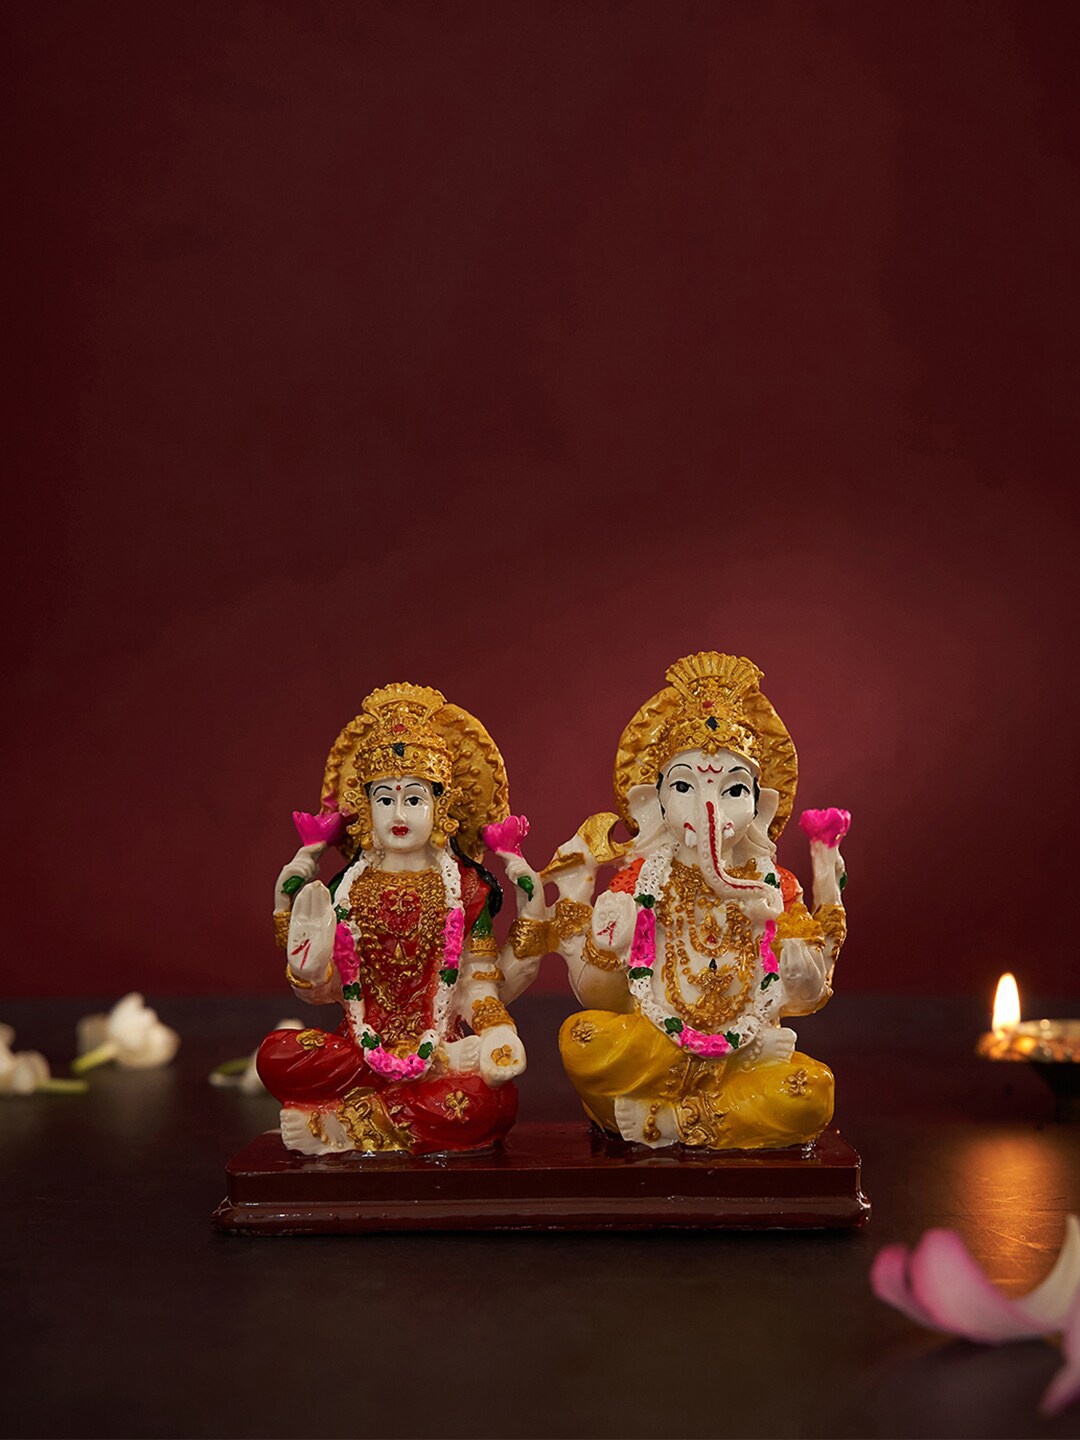 

DecorTwist White & Red Textured Lord Ganesha And Lakshmi Idol Showpiece